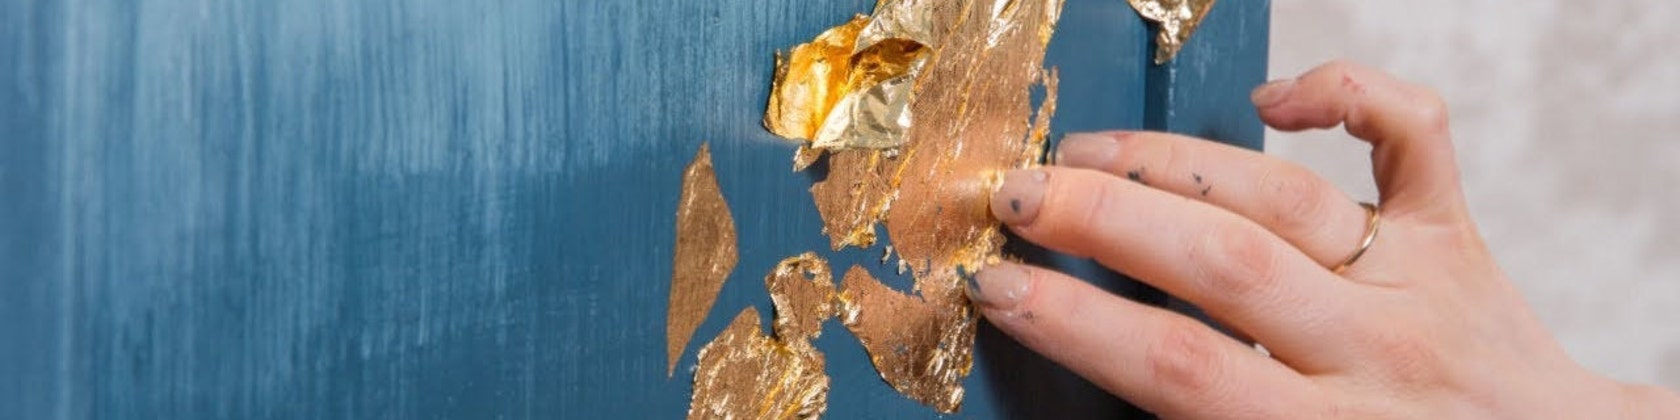 23.5K Gold Flakes (Small) — L.A. Gold Leaf Wholesaler U.S.